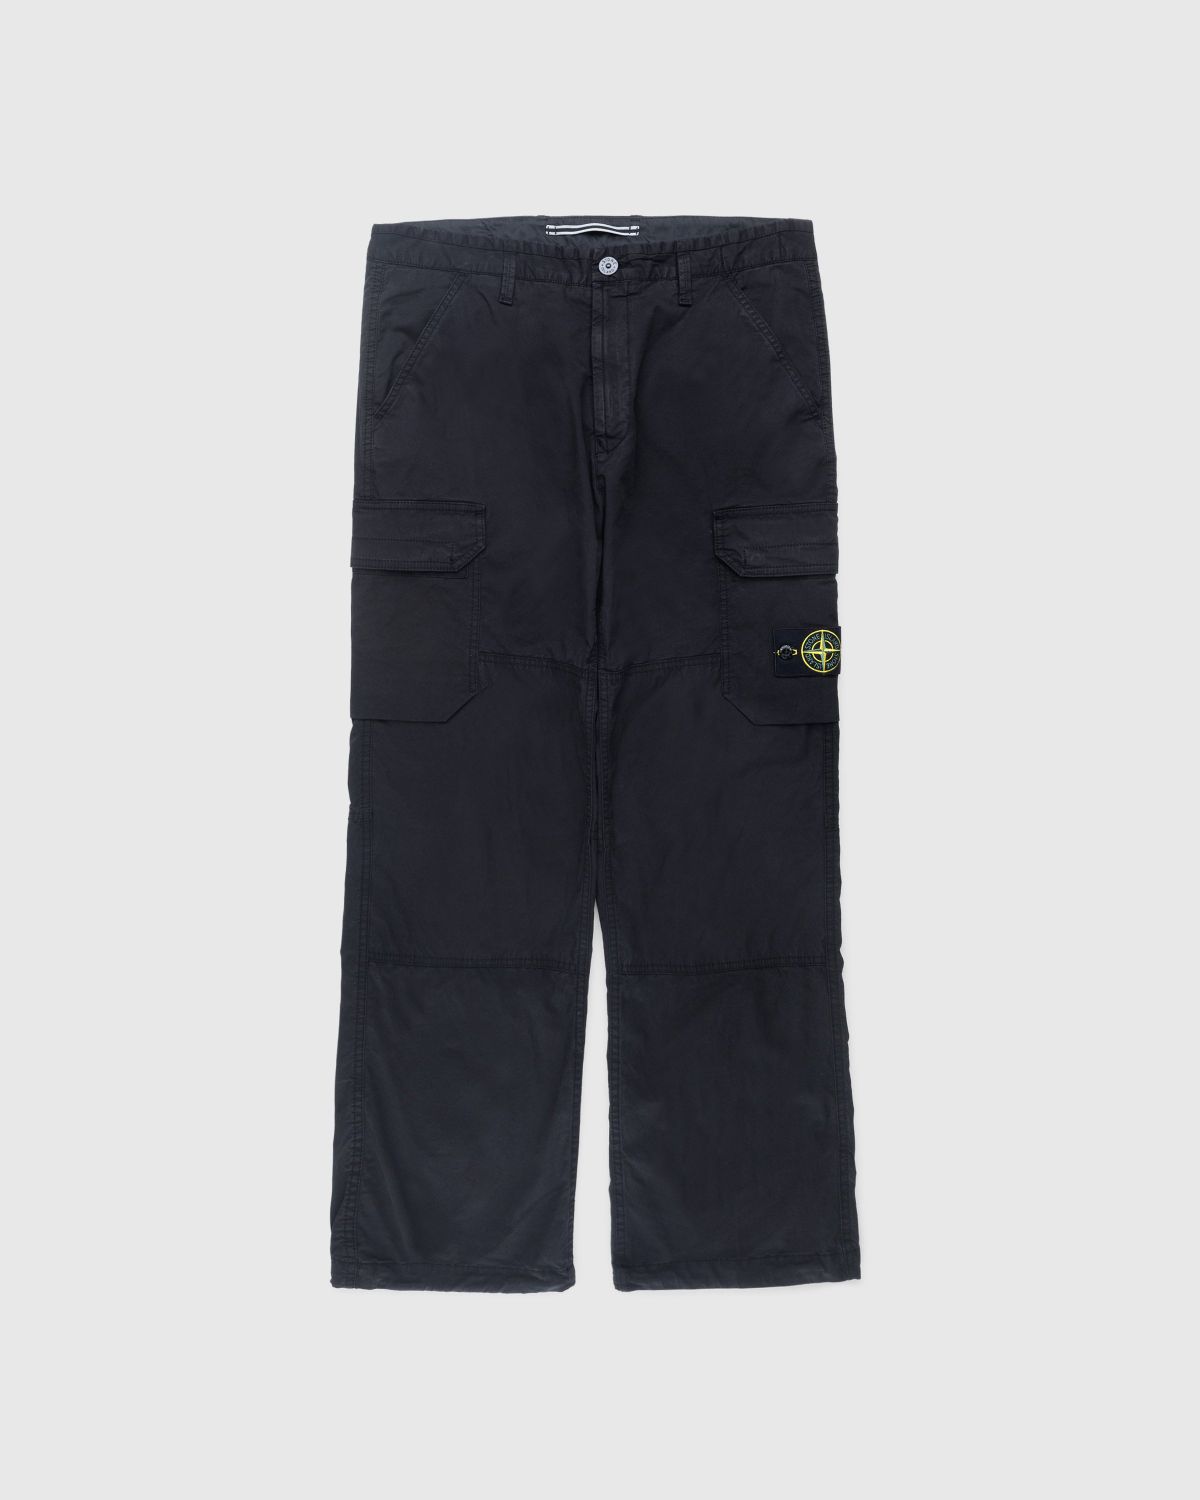 Stone Island – Stretch Cotton Gabardine Cargo Pants Black - Pants - Black - Image 1